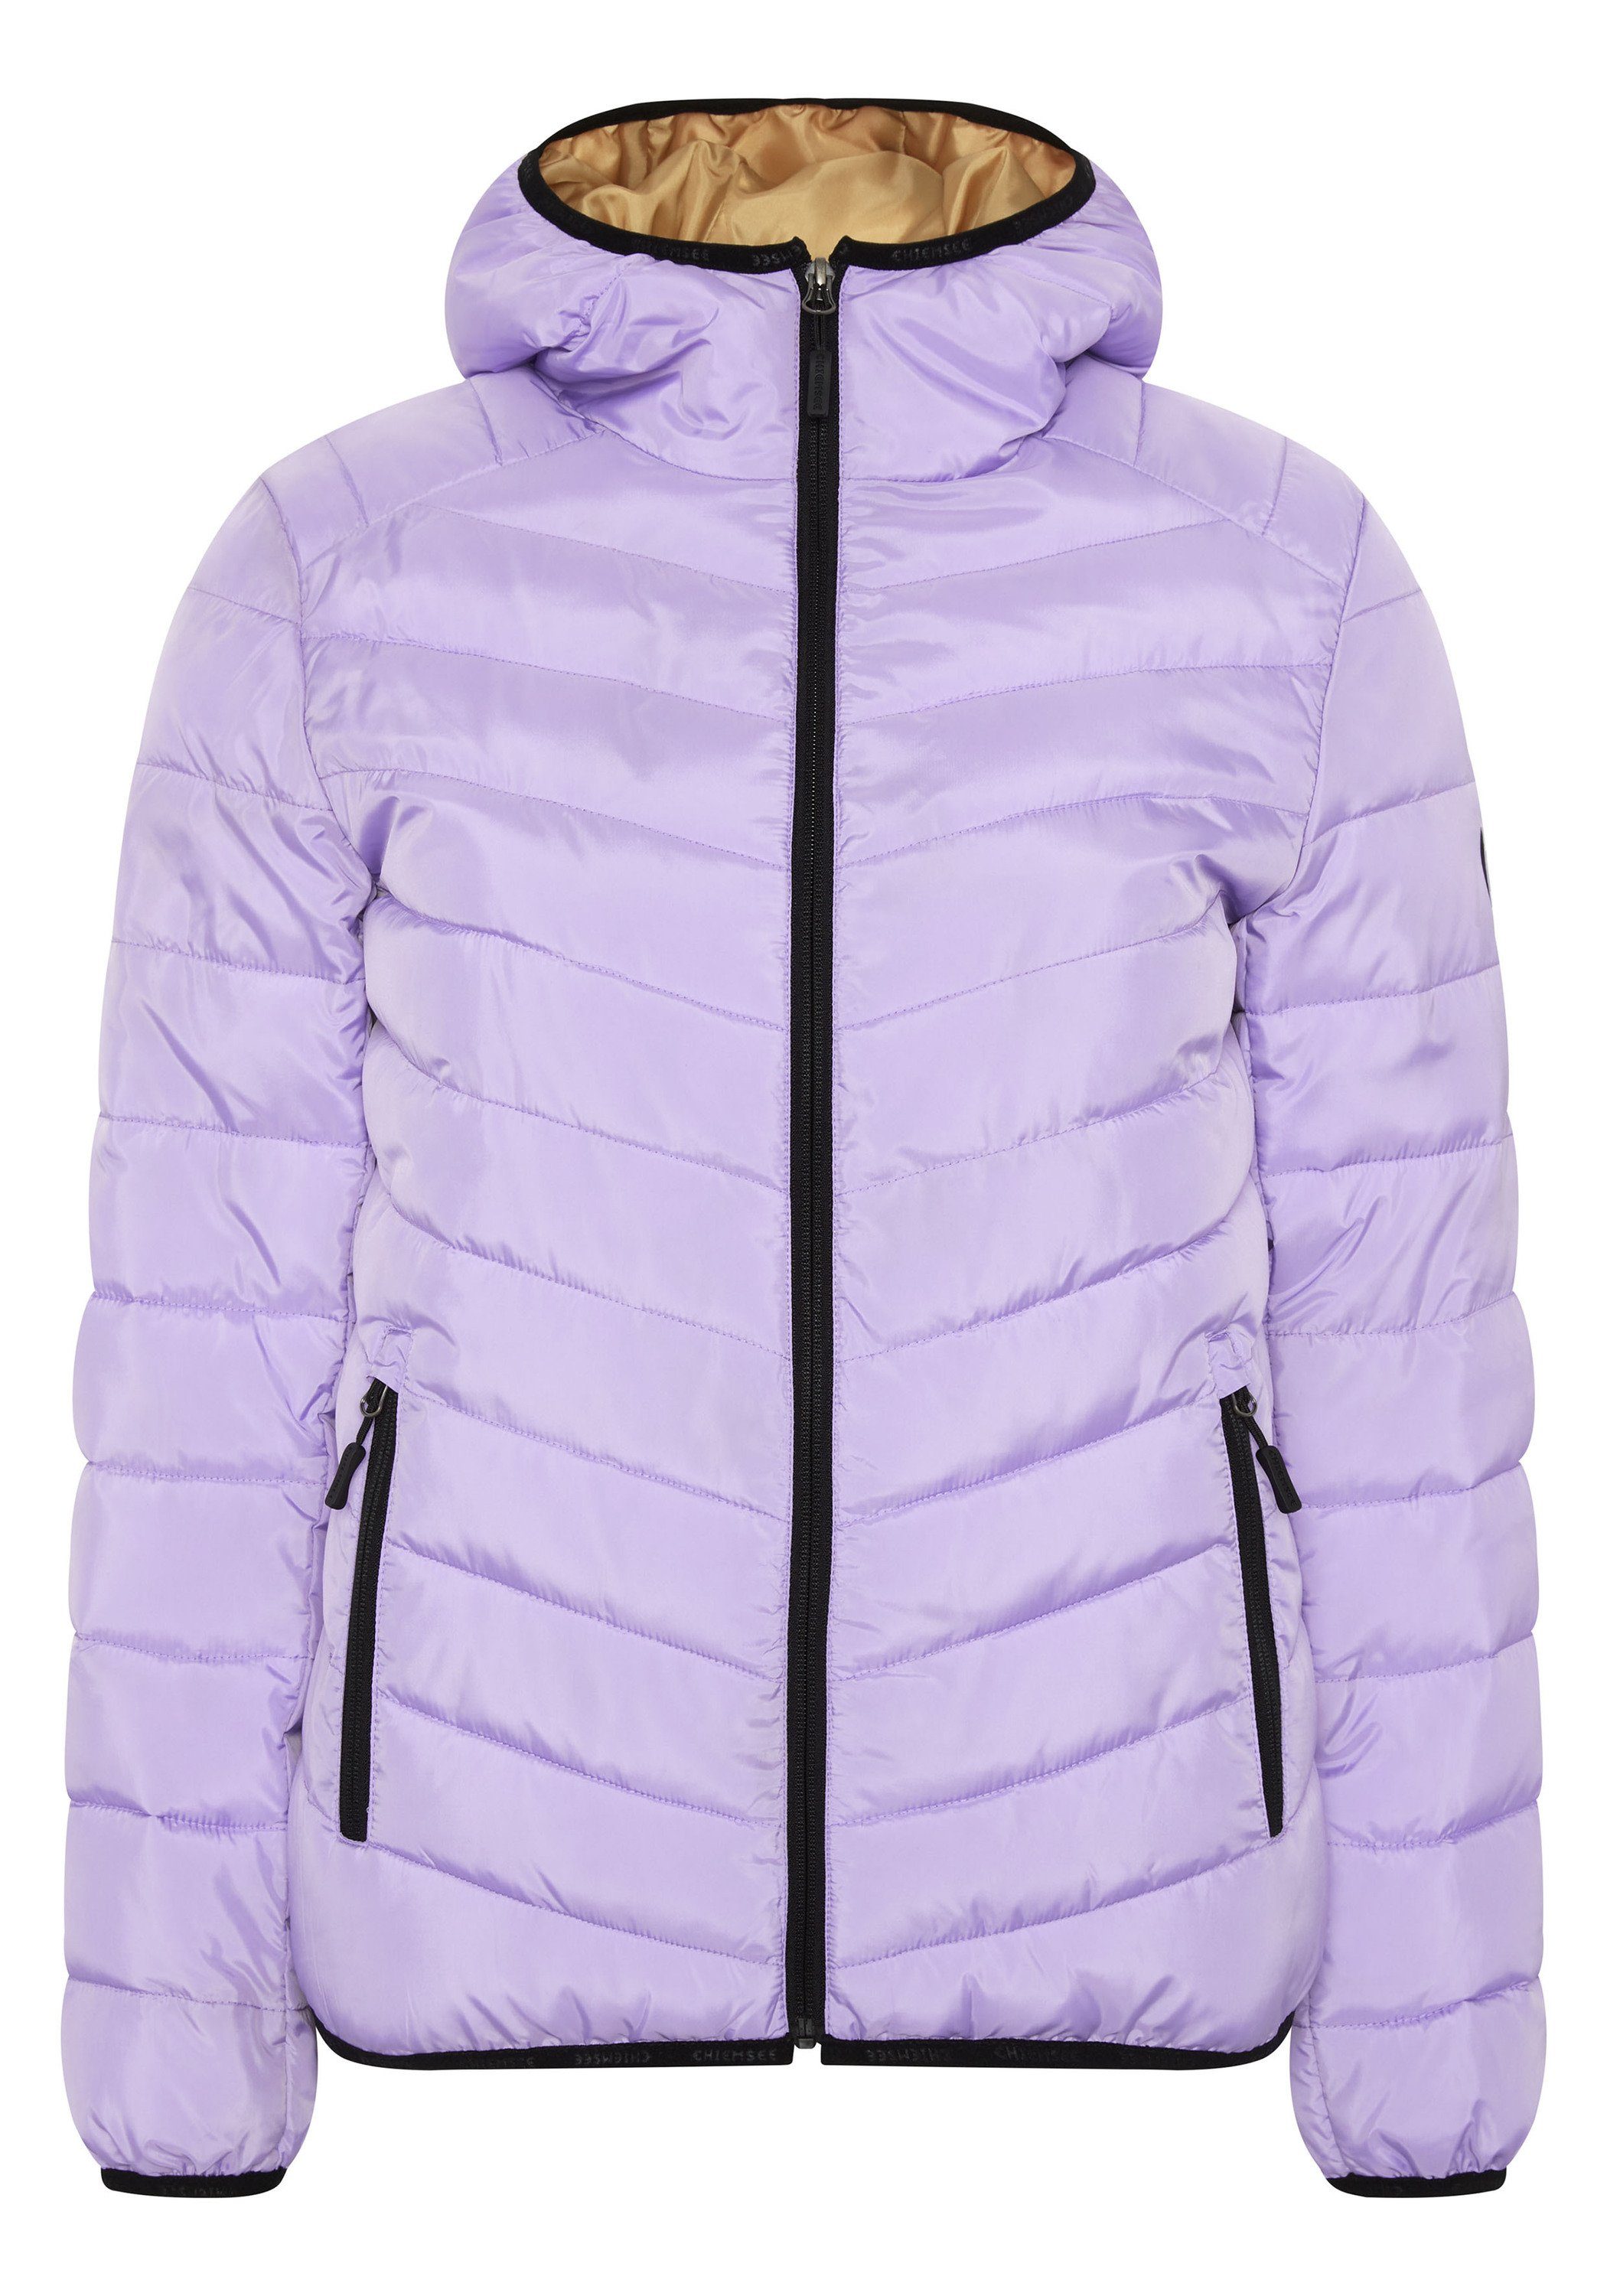 Chiemsee Outdoorjacke Wattierte Jacke in moderner Stepp-Optik 1 15-3716 Purple Rose